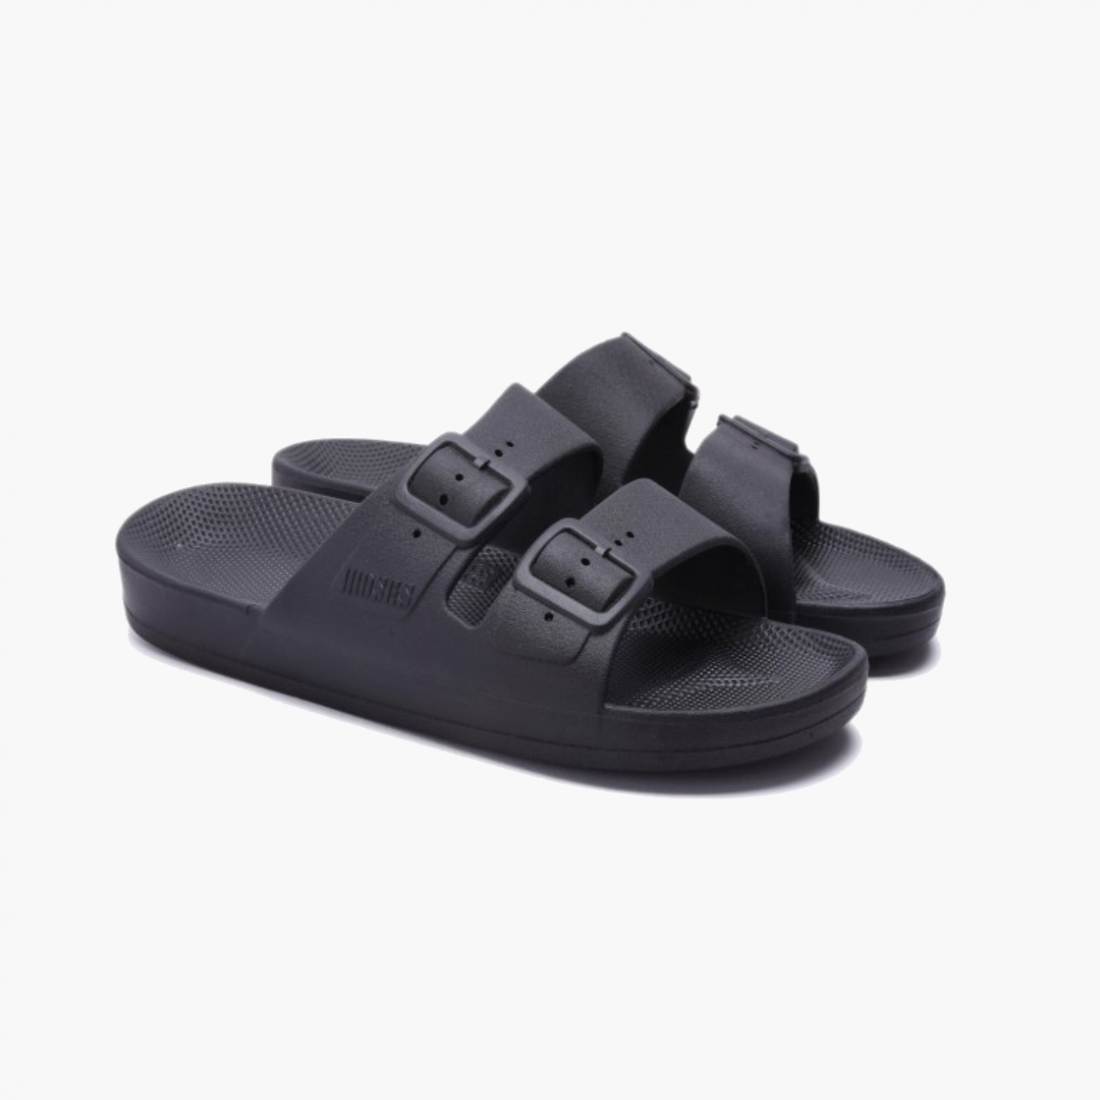 Black Kids sandals